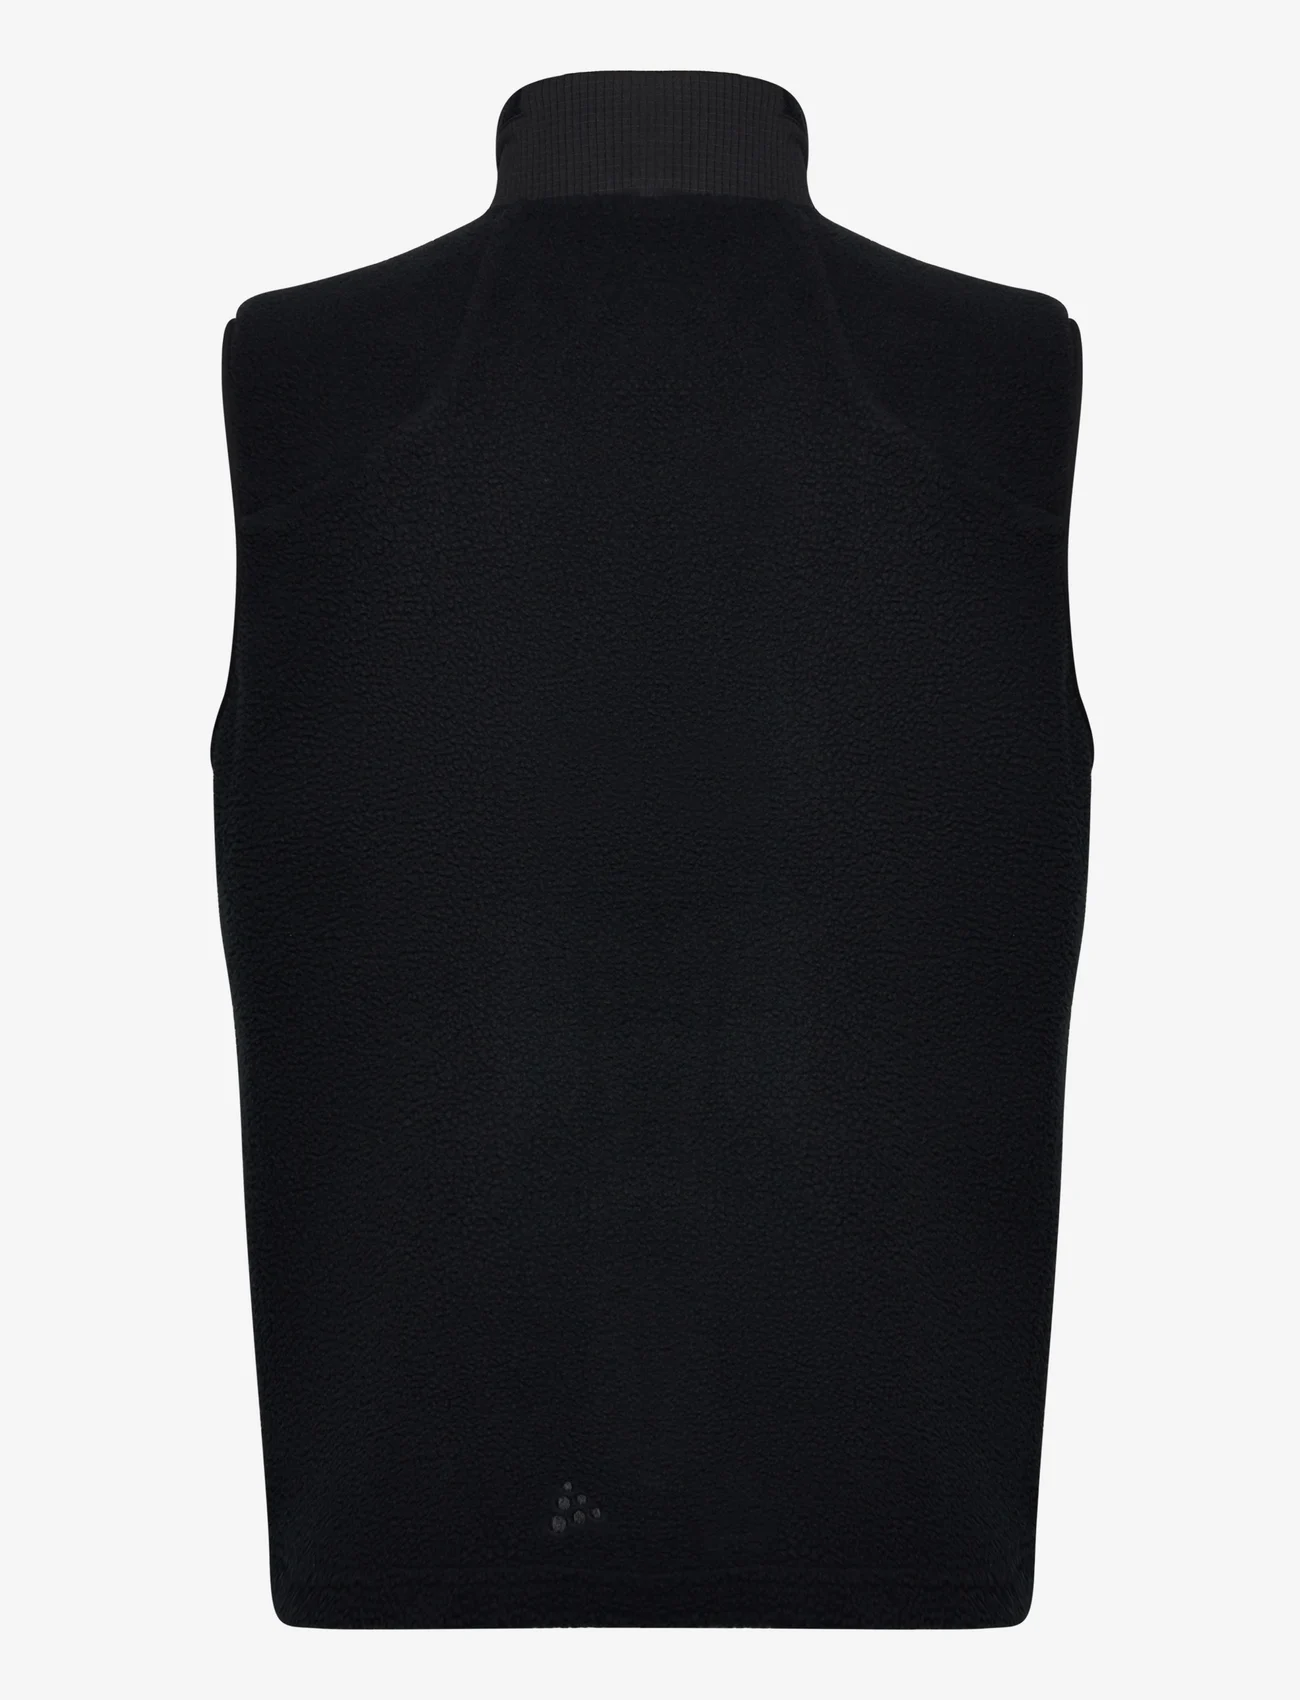 Craft - ADV Explore Pile Fleece Vest M - black - 1